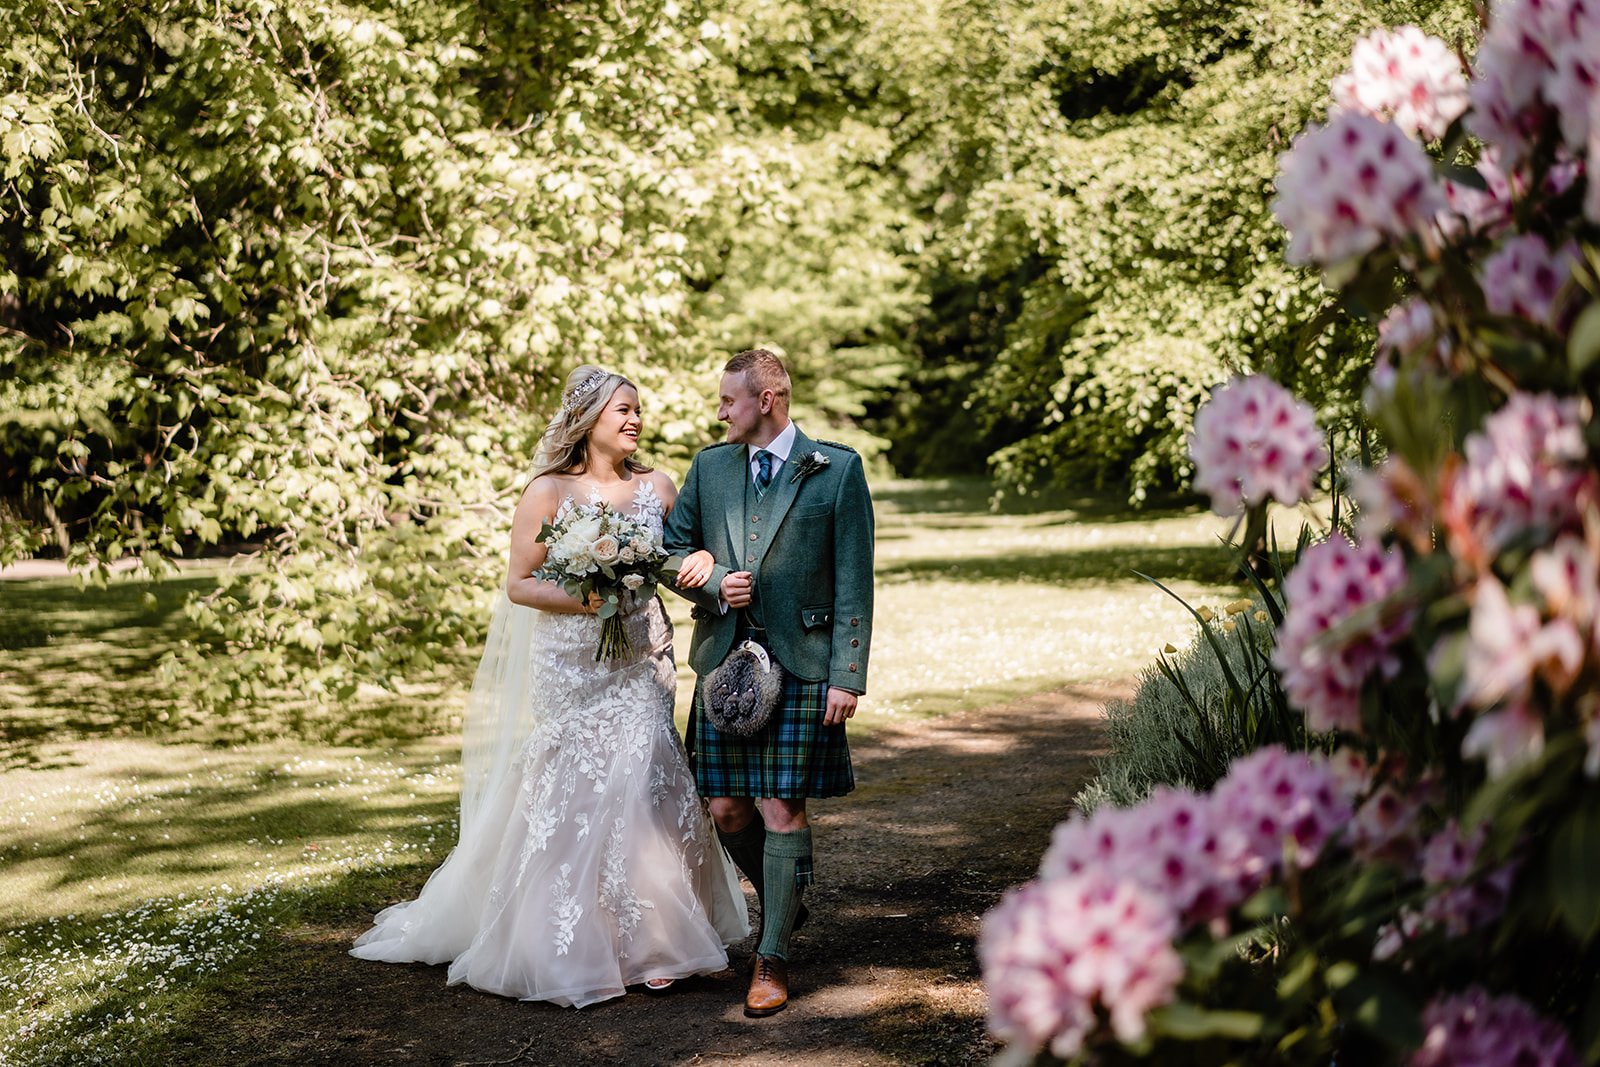 newlyweds walking through queen street gardens, Edinburgh for their first wedding photos.